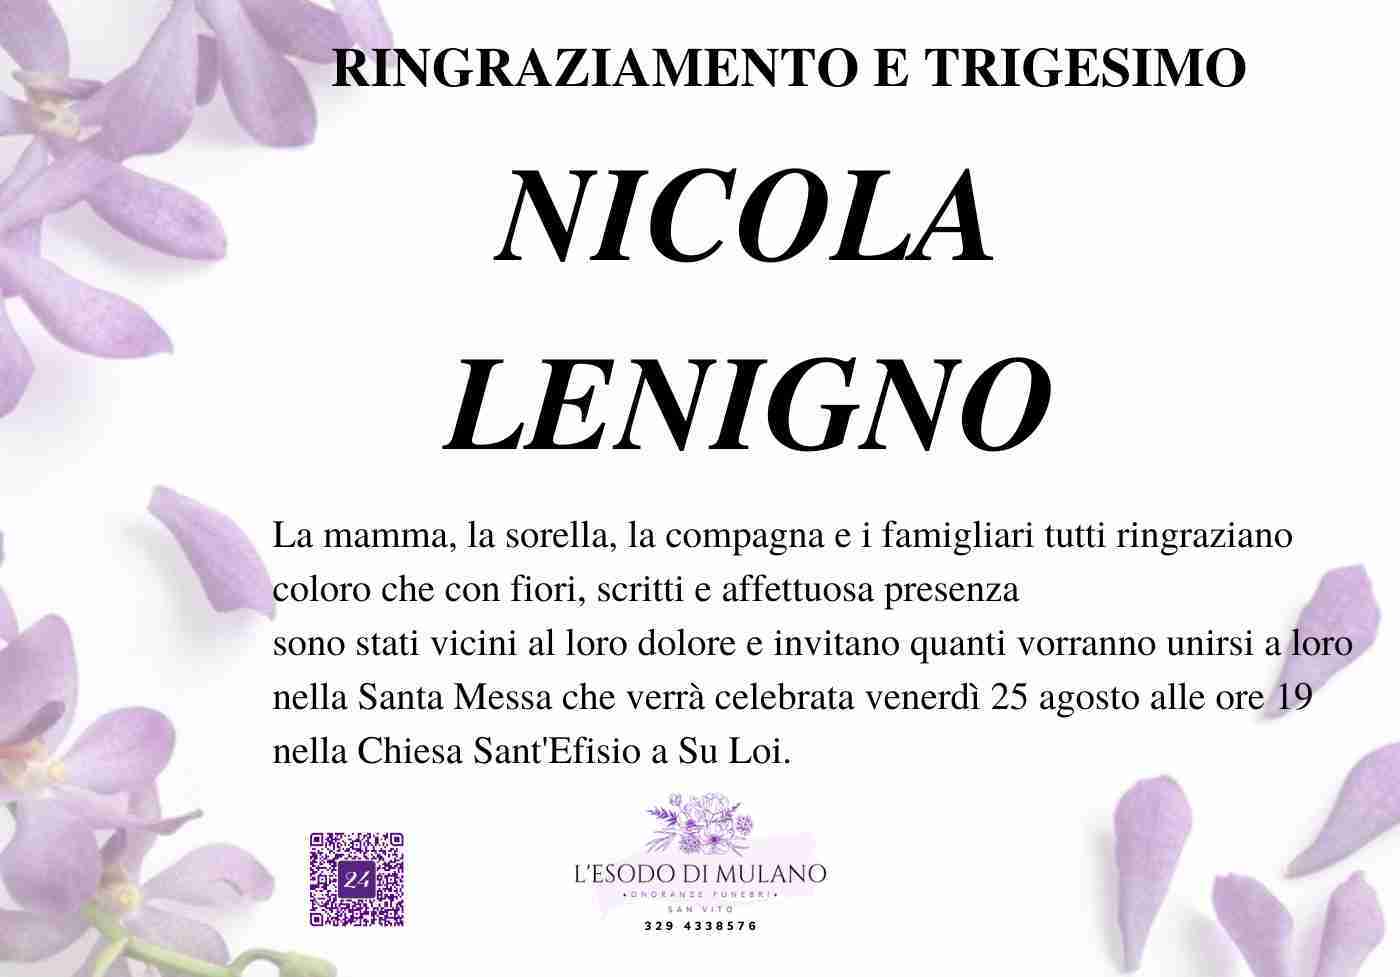 Nicola Lenigno